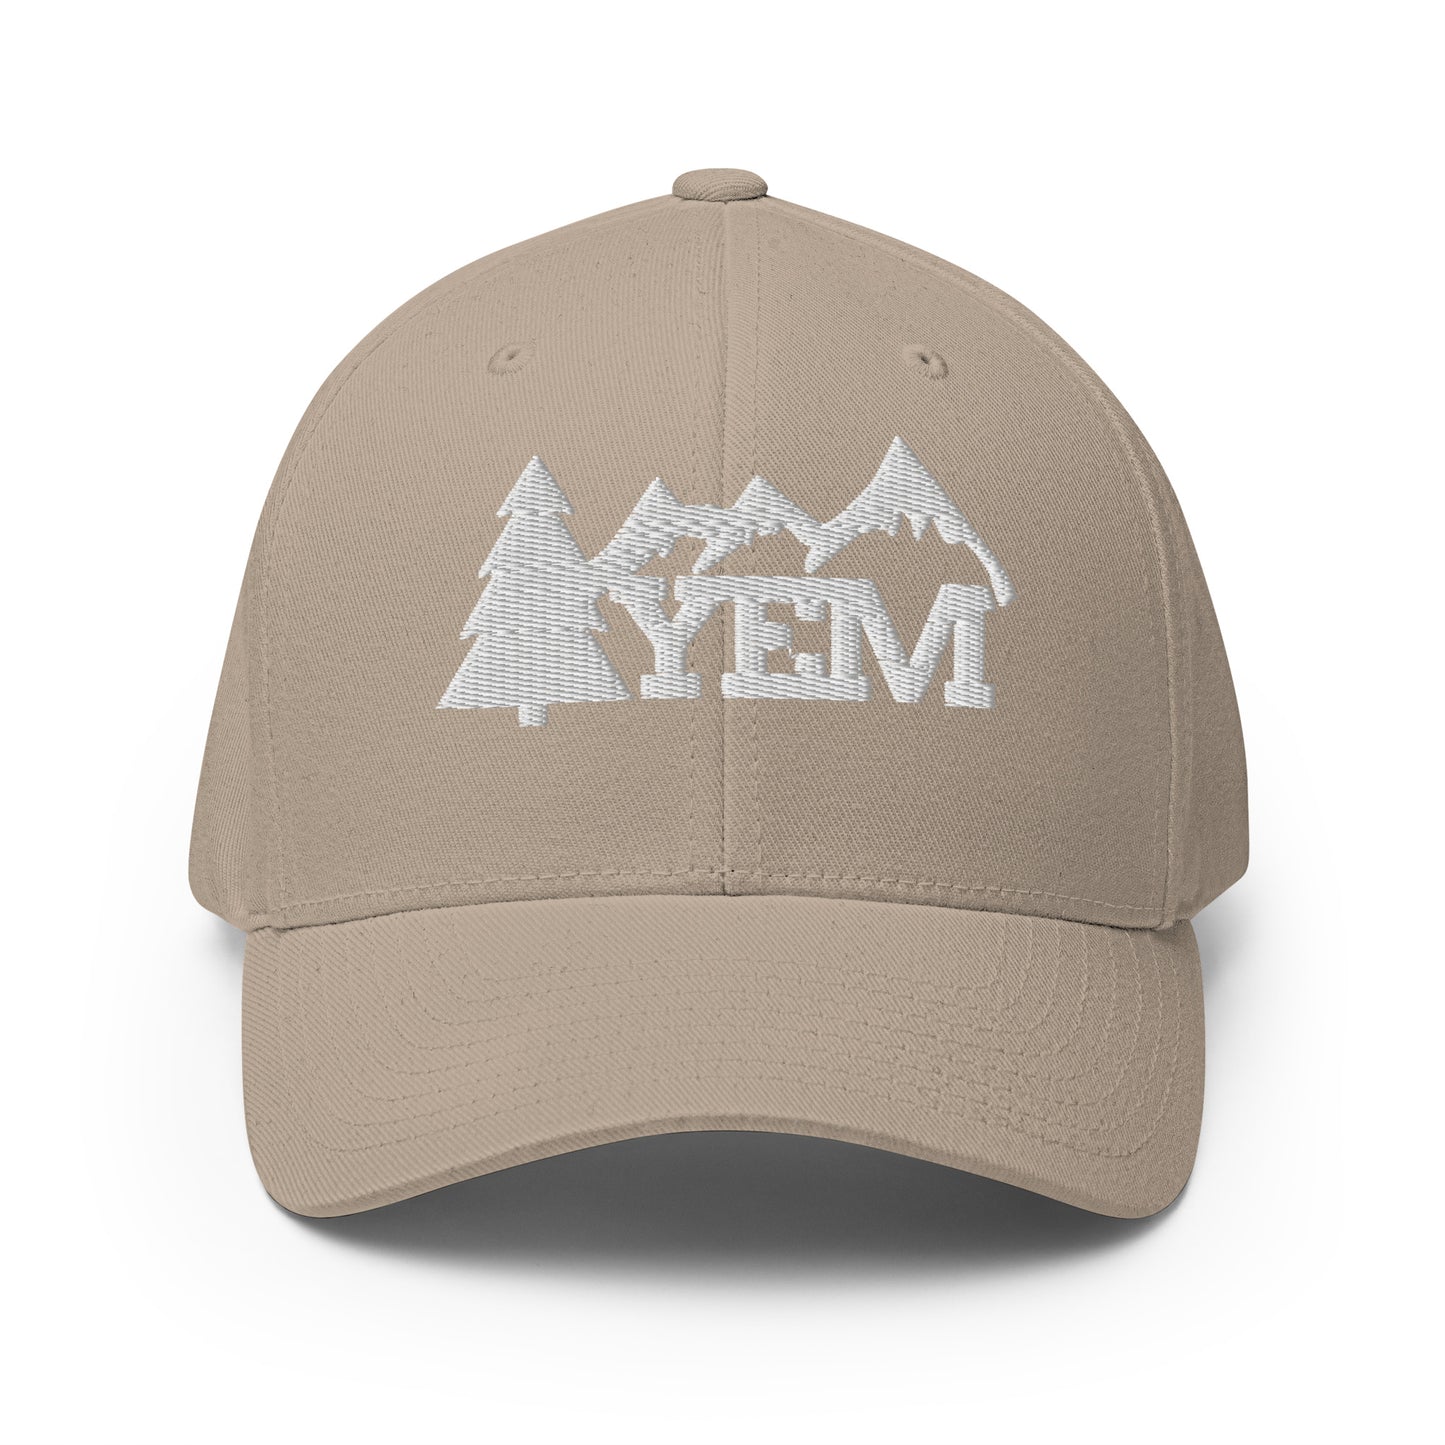 Yem Tree Closed-Back Cap | Flexfit 6277 | Flat Embroidery